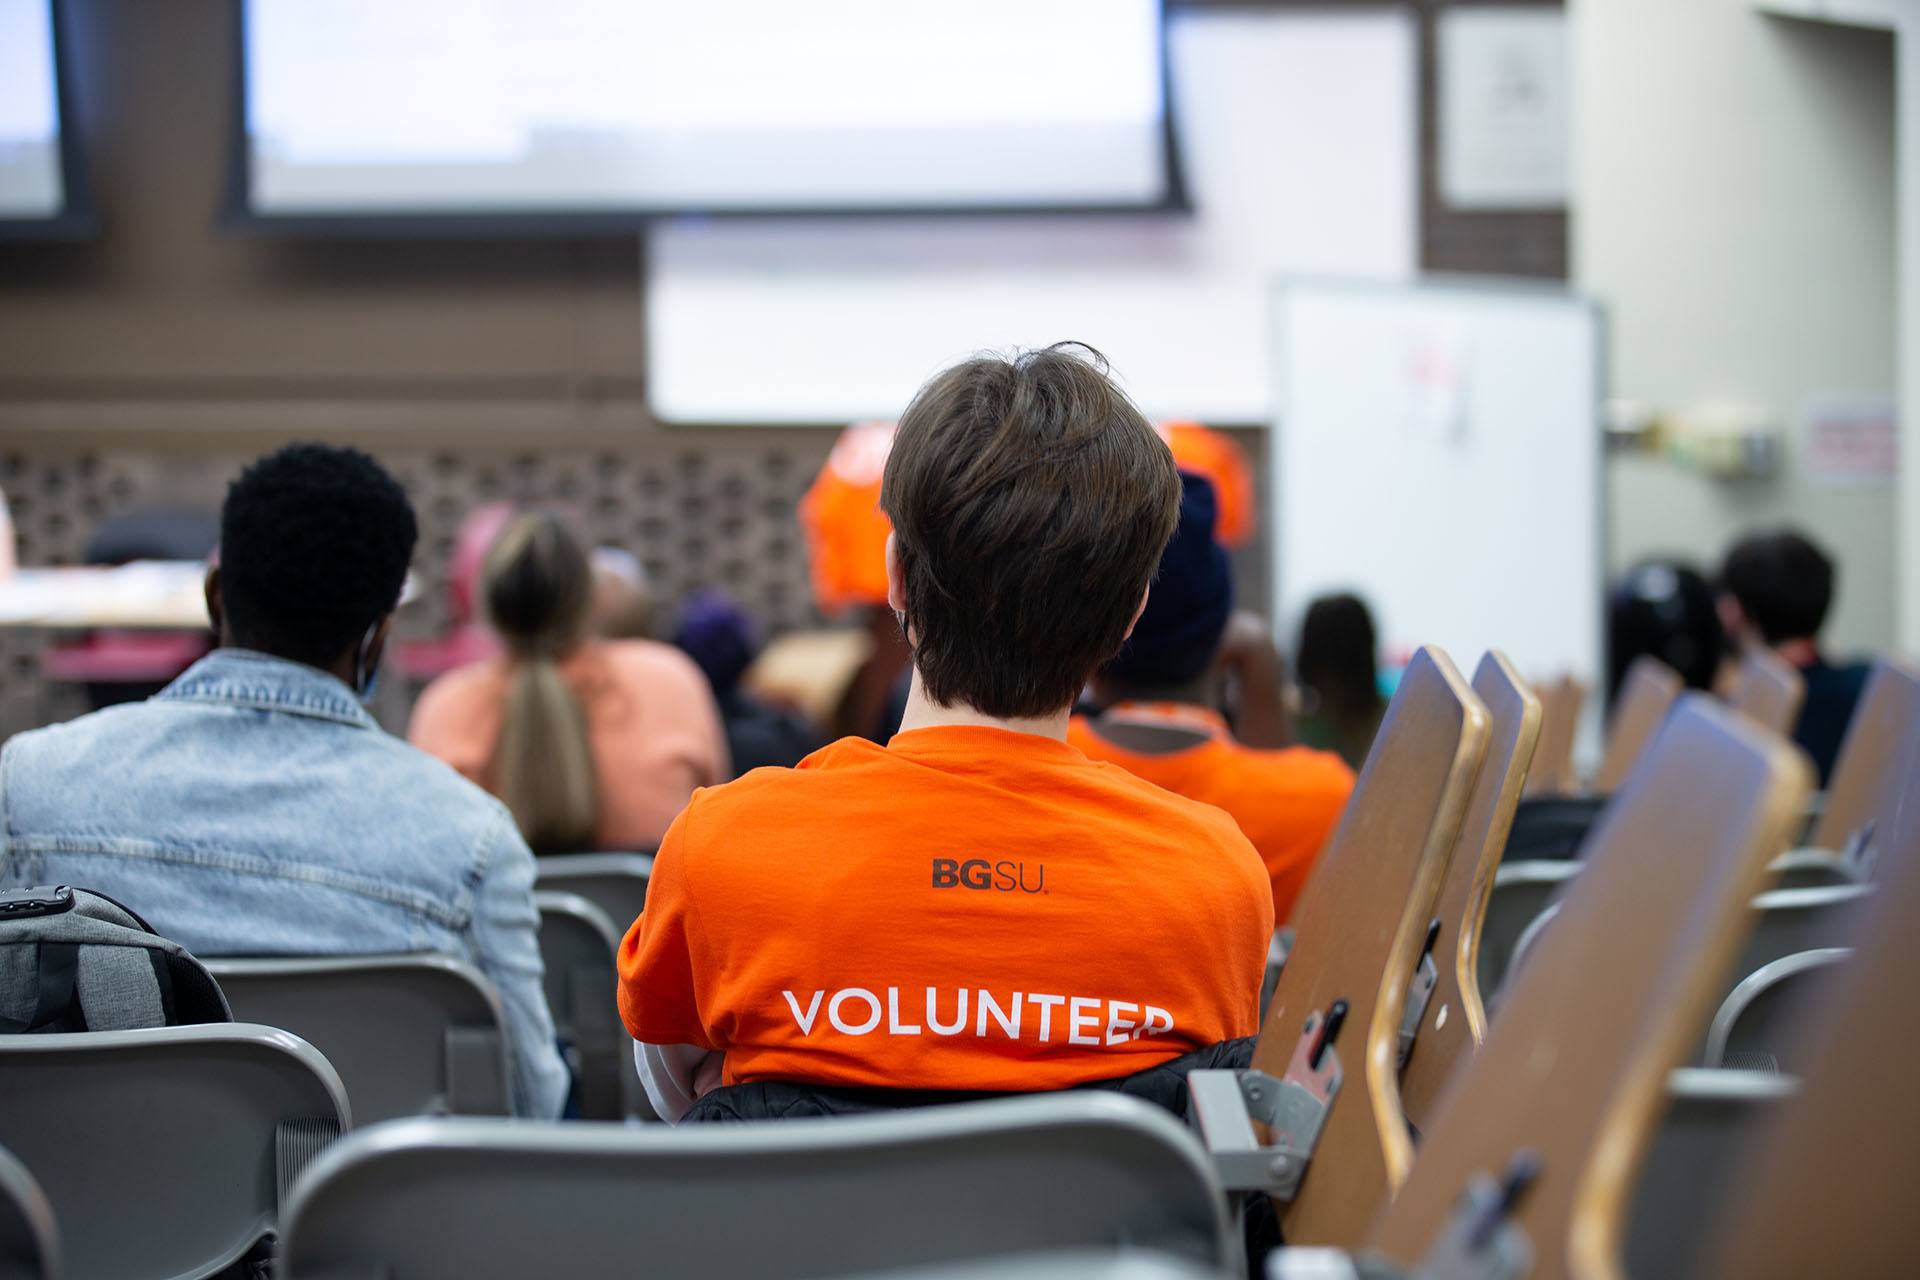 BGSU student wears an orange volunteer shirt.